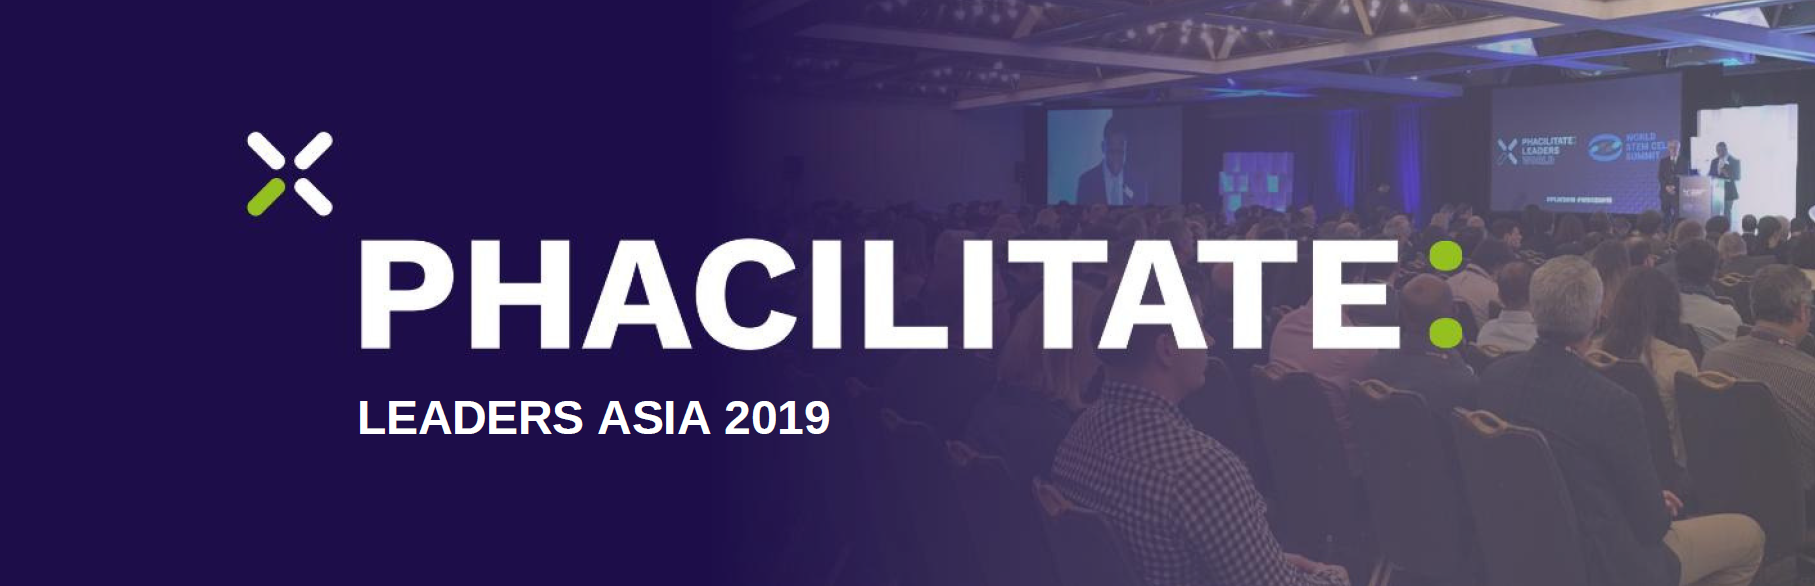 Phacilitate Leaders Asia 2019 – Shanghai, CN – October 15-16th, 2019.